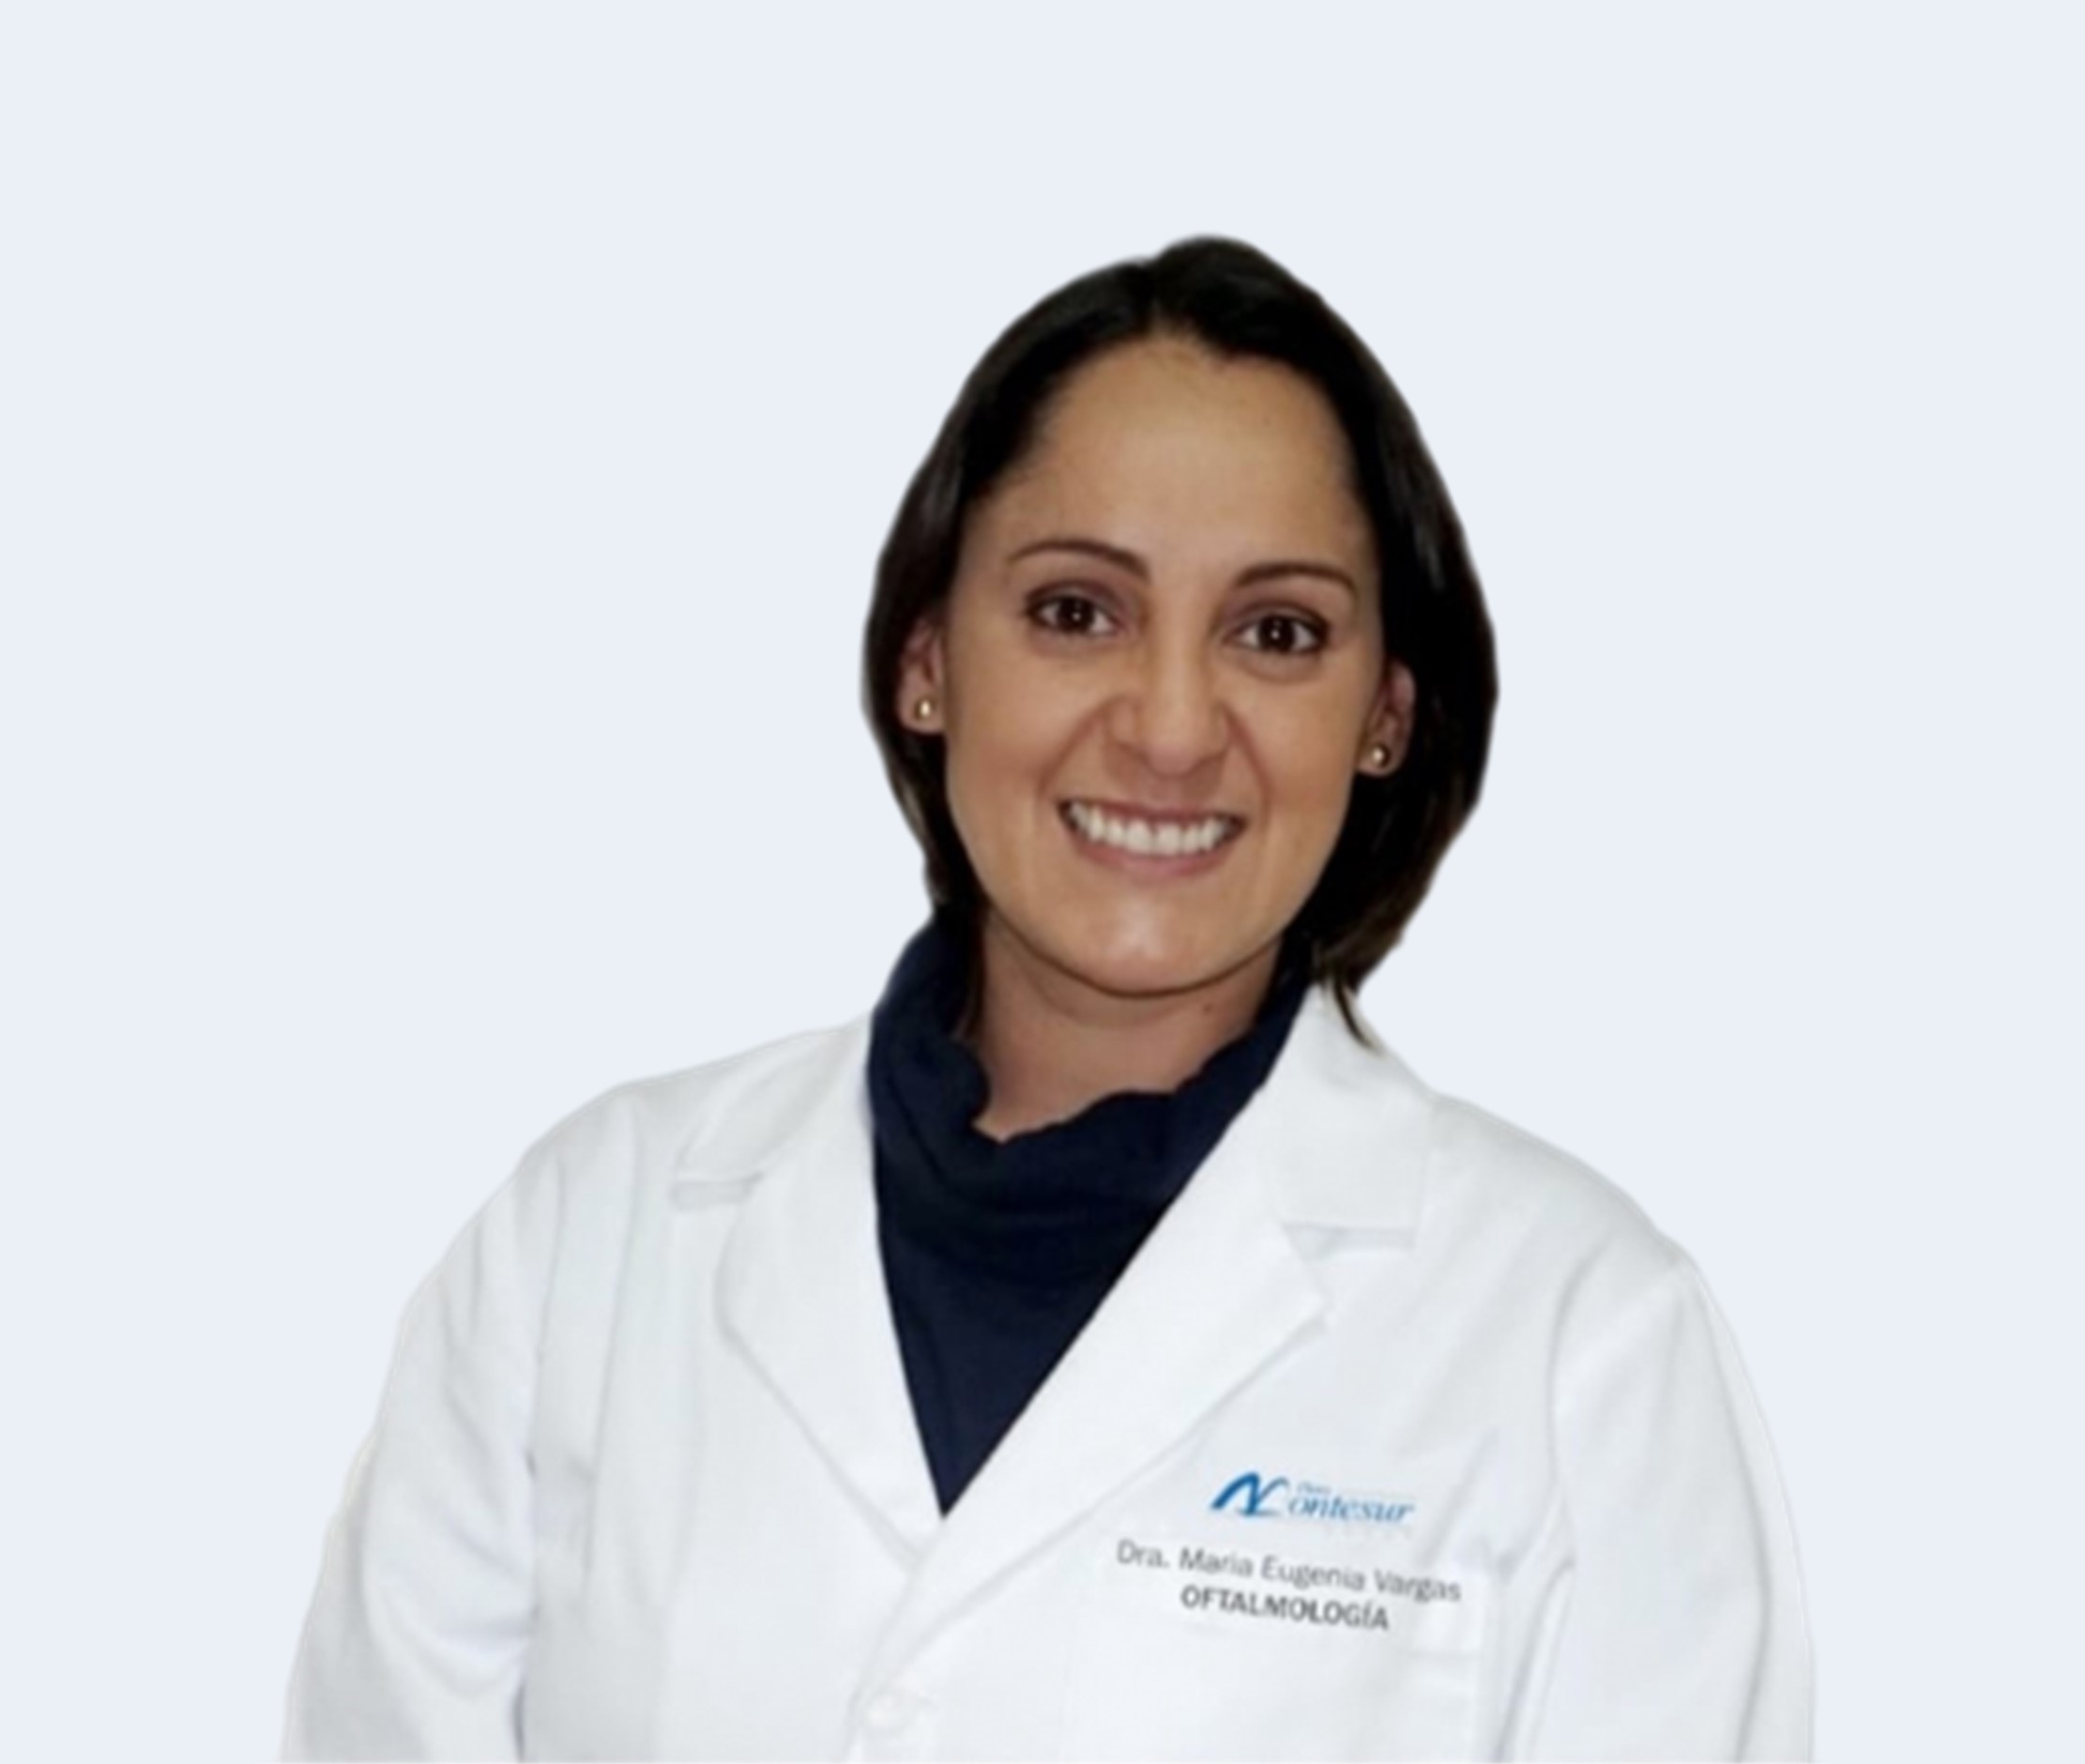 Dra. Maria Eugenia Vargas Ovalle Oftalmologo Oftalmólogo Oftalmología